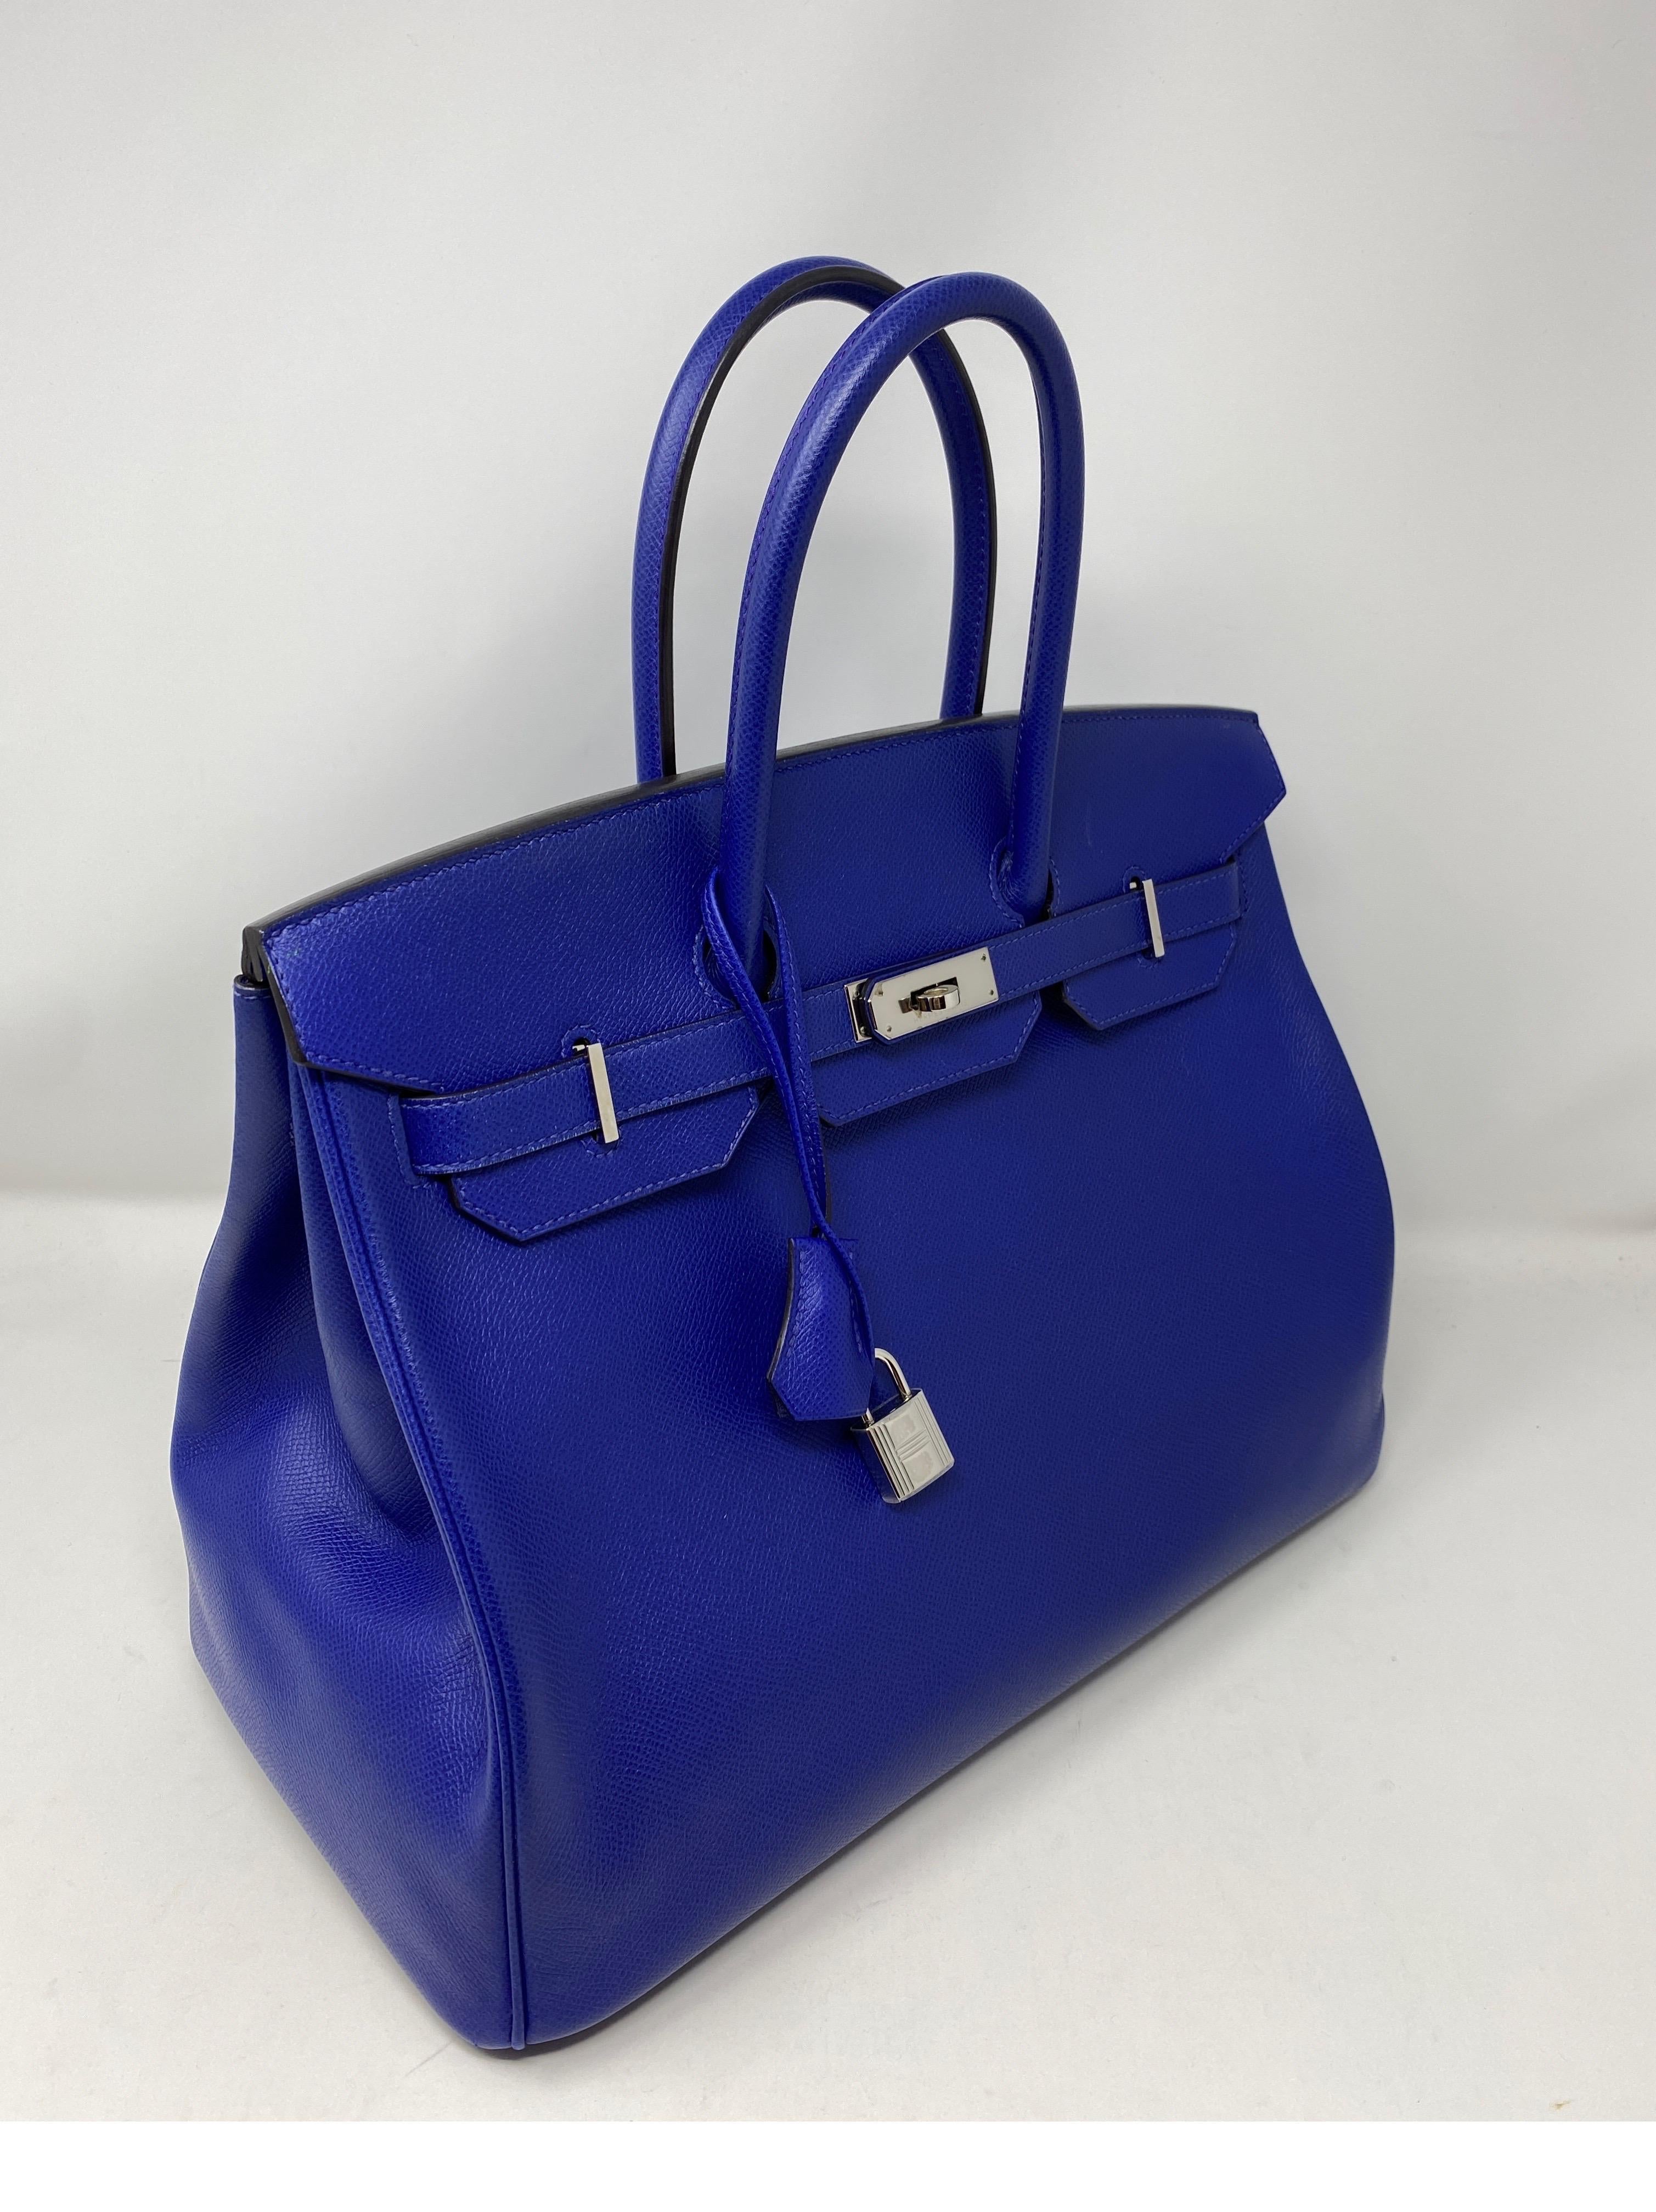 Purple Hermes Bleu Electrique Birkin 35 Bag